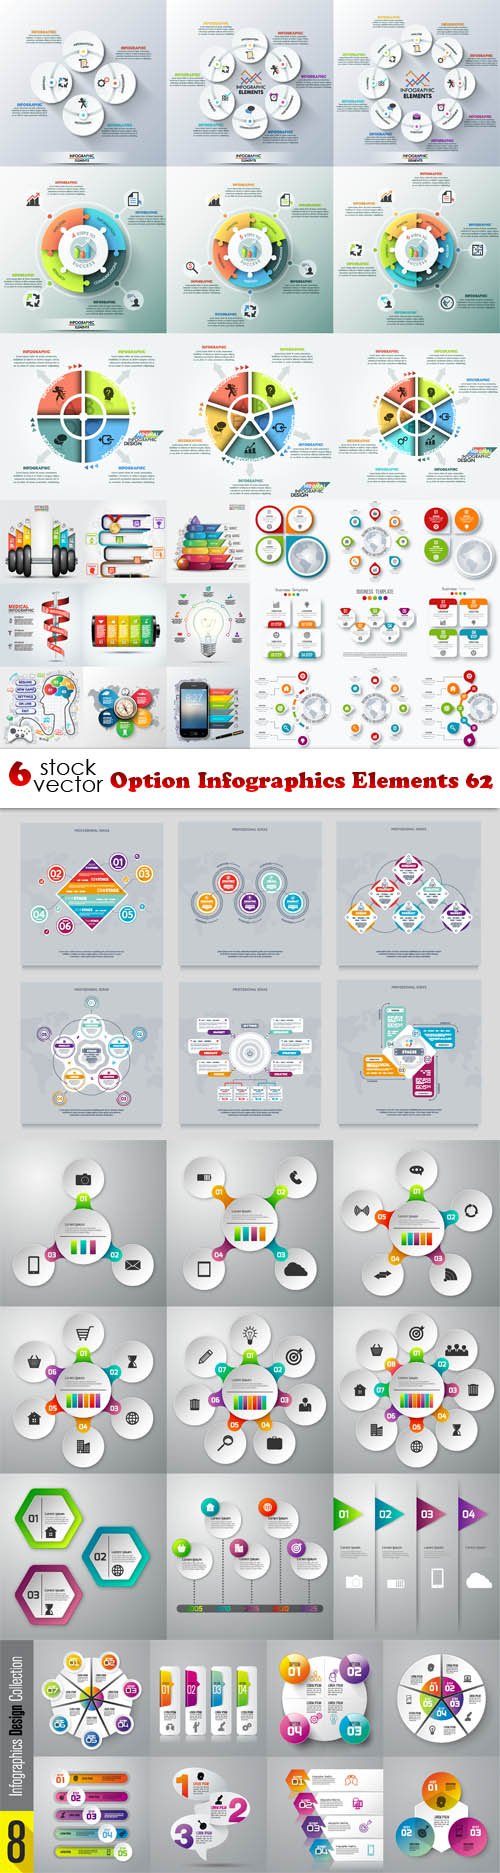 Vectors - Option Infographics Elements 62